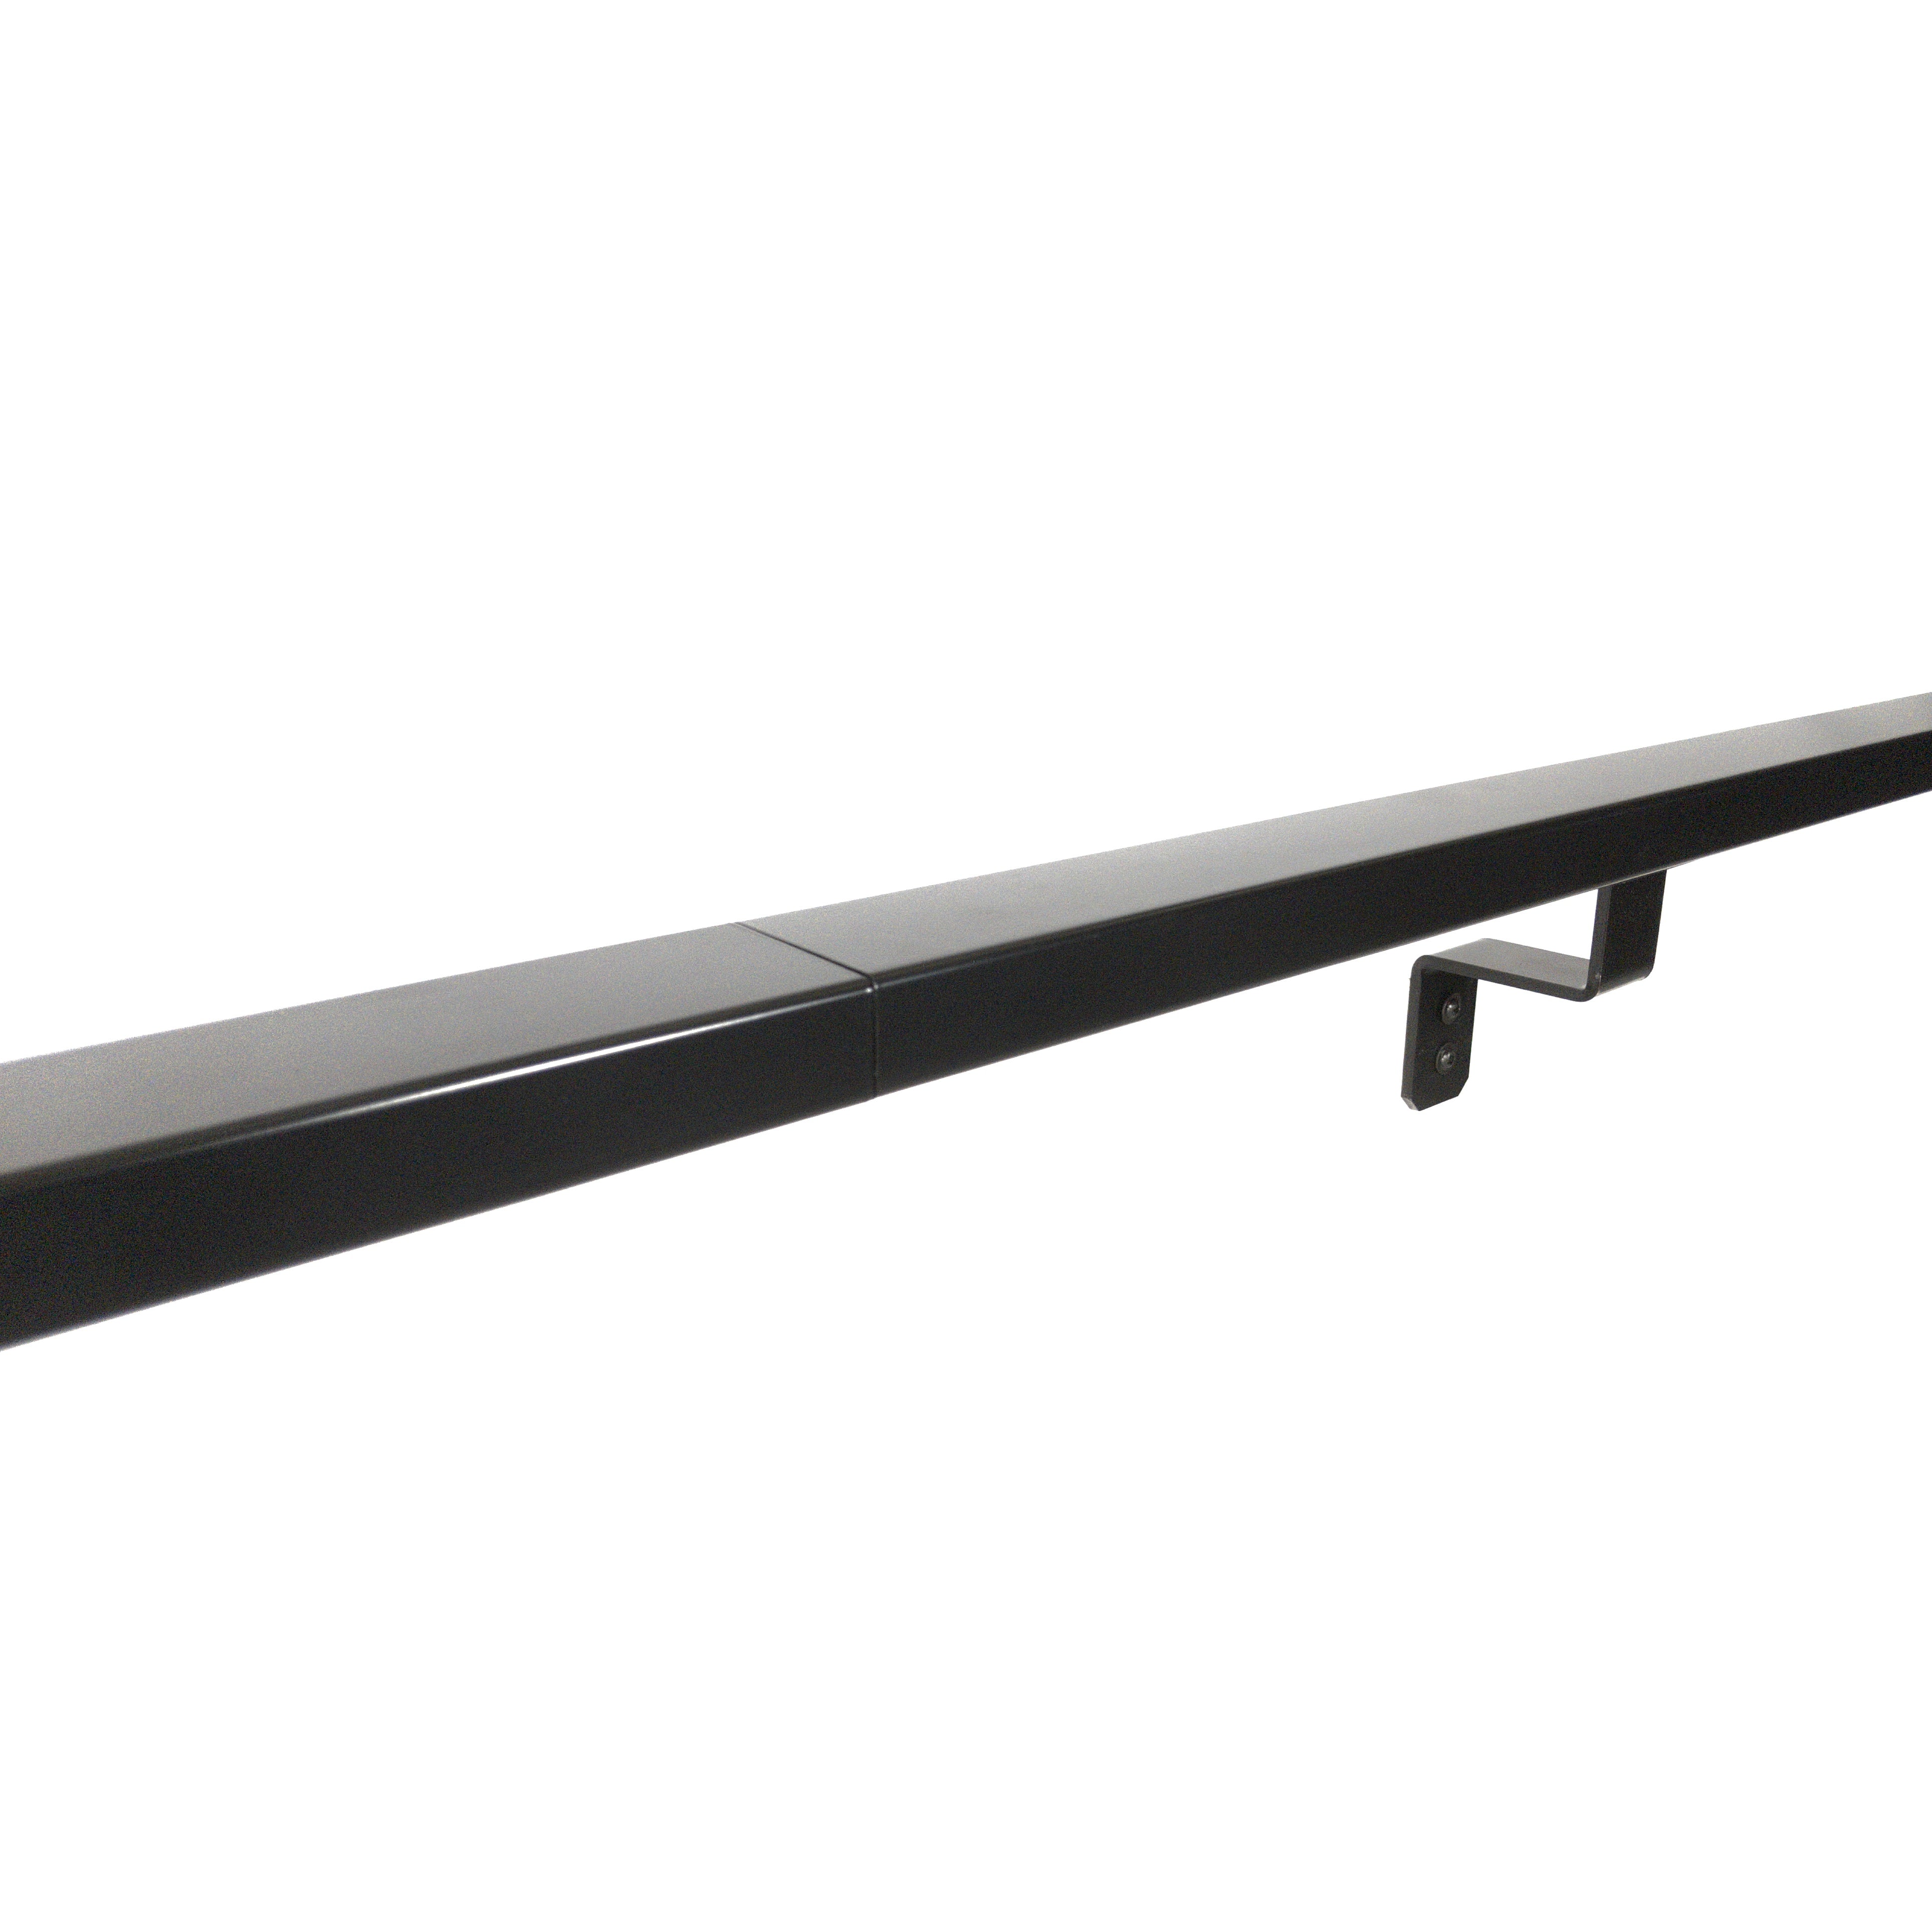 Rustic Farmhouse Aluminum Complete Handrail Grab Bar Set, Brackets Included, Black Powder Coated Finish